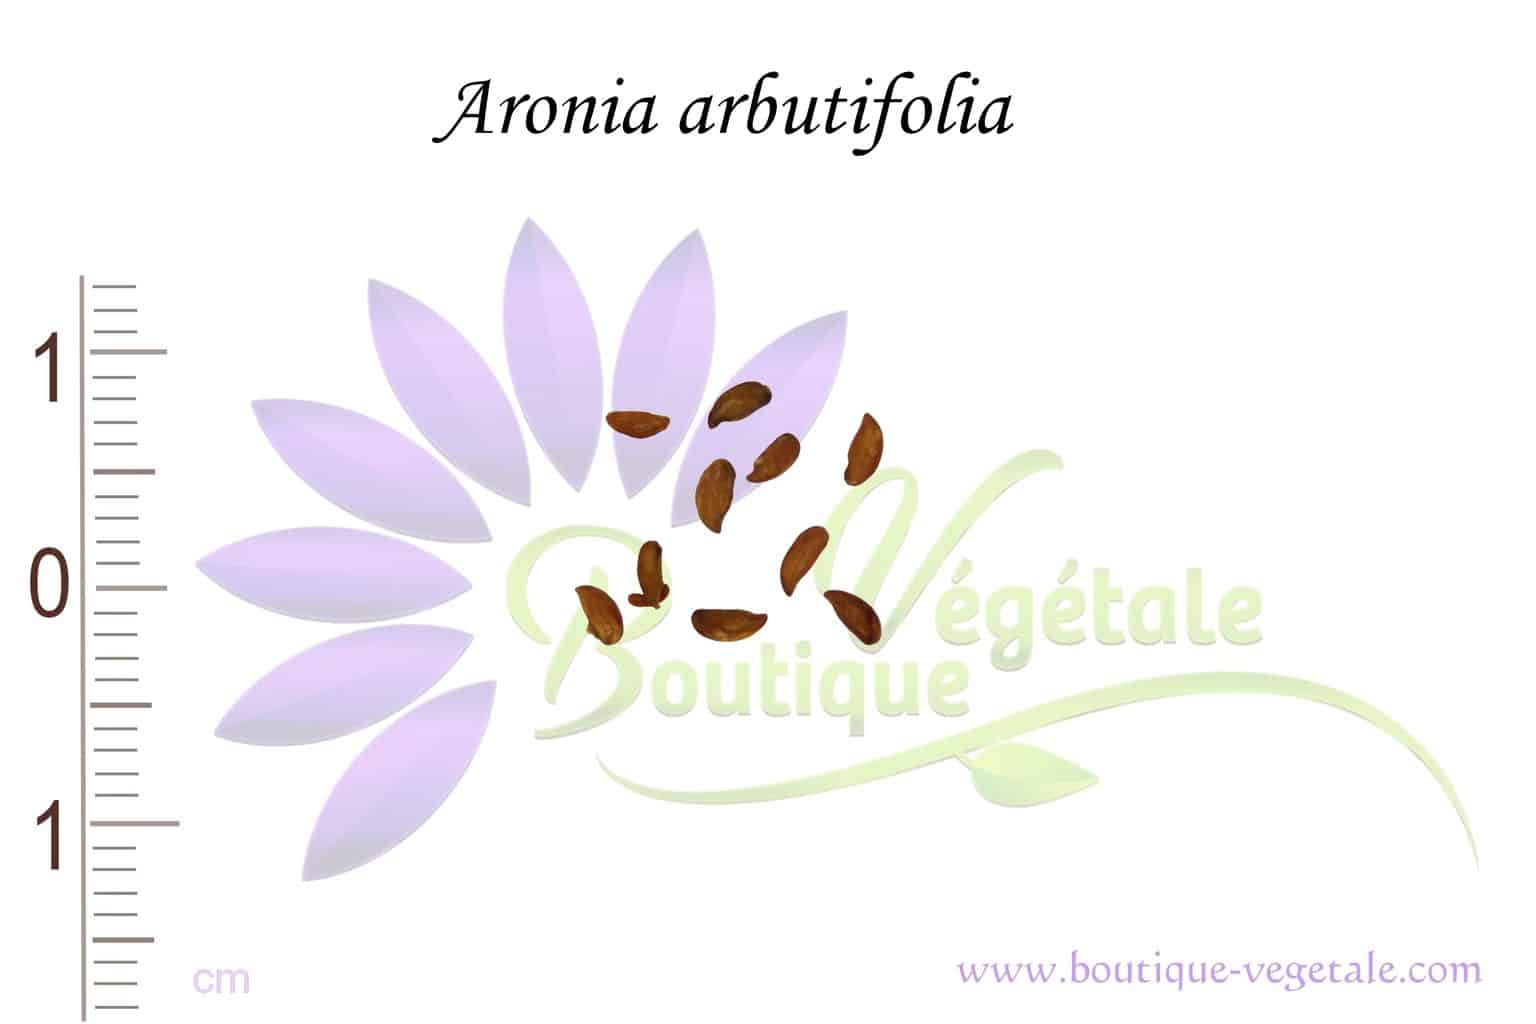 Graines d'Aronia arbutifolia, Aronia arbutifolia seeds